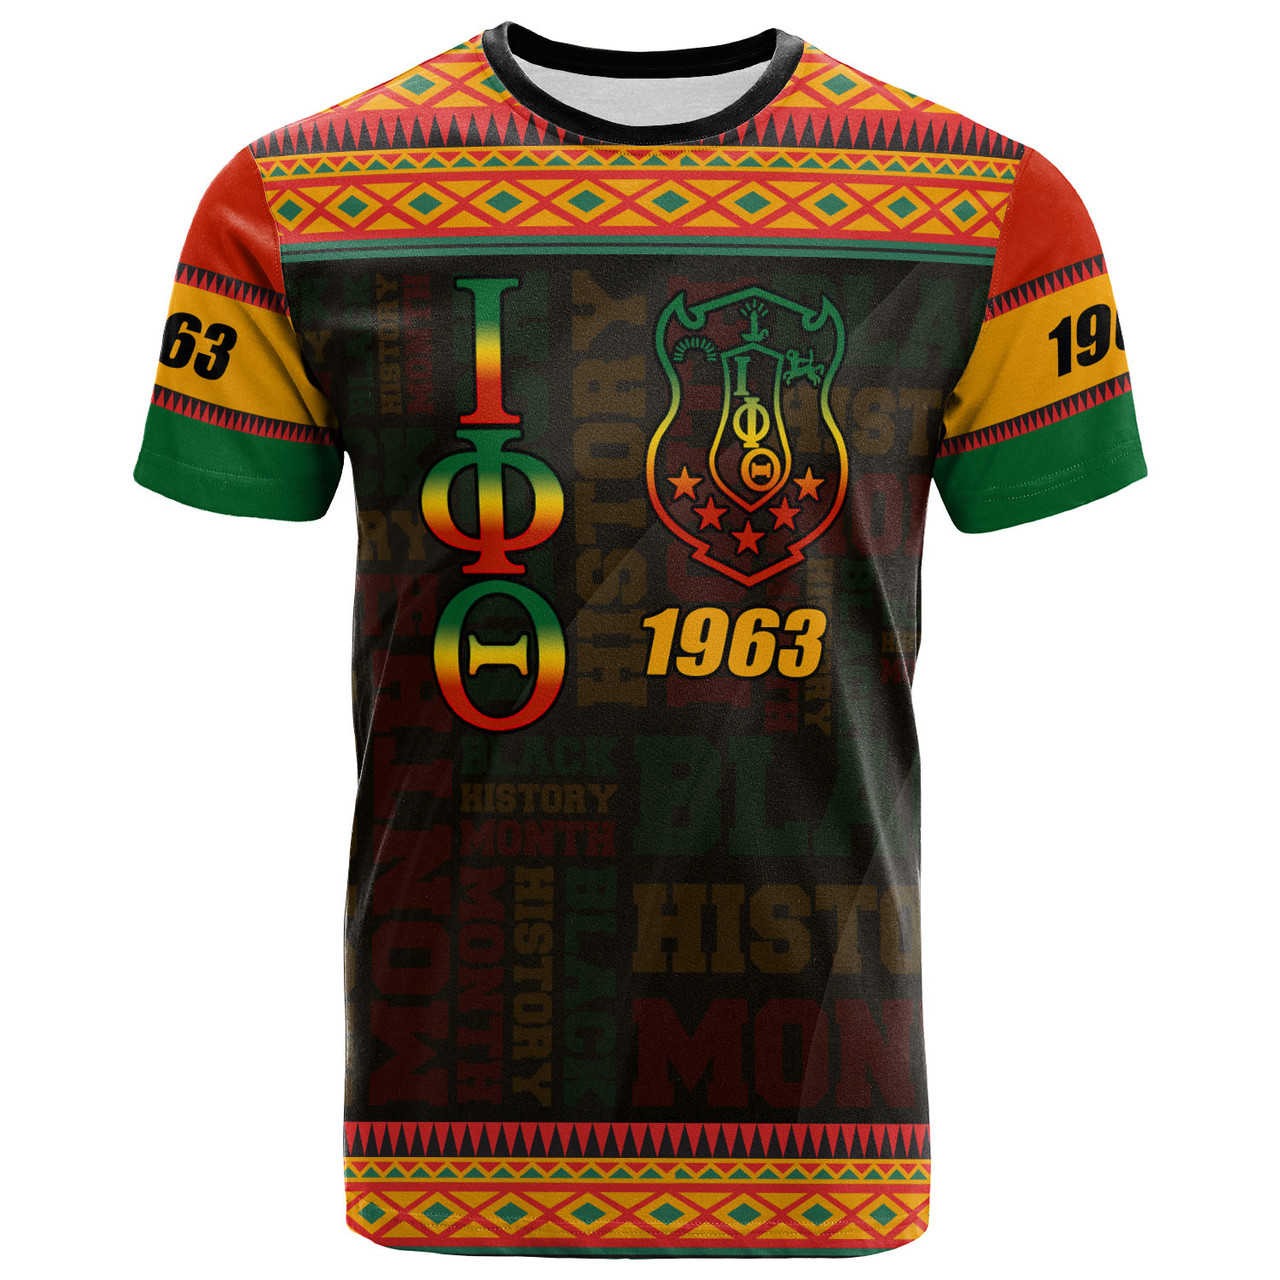 Iota Phi Theta Black History Month T-Shirt